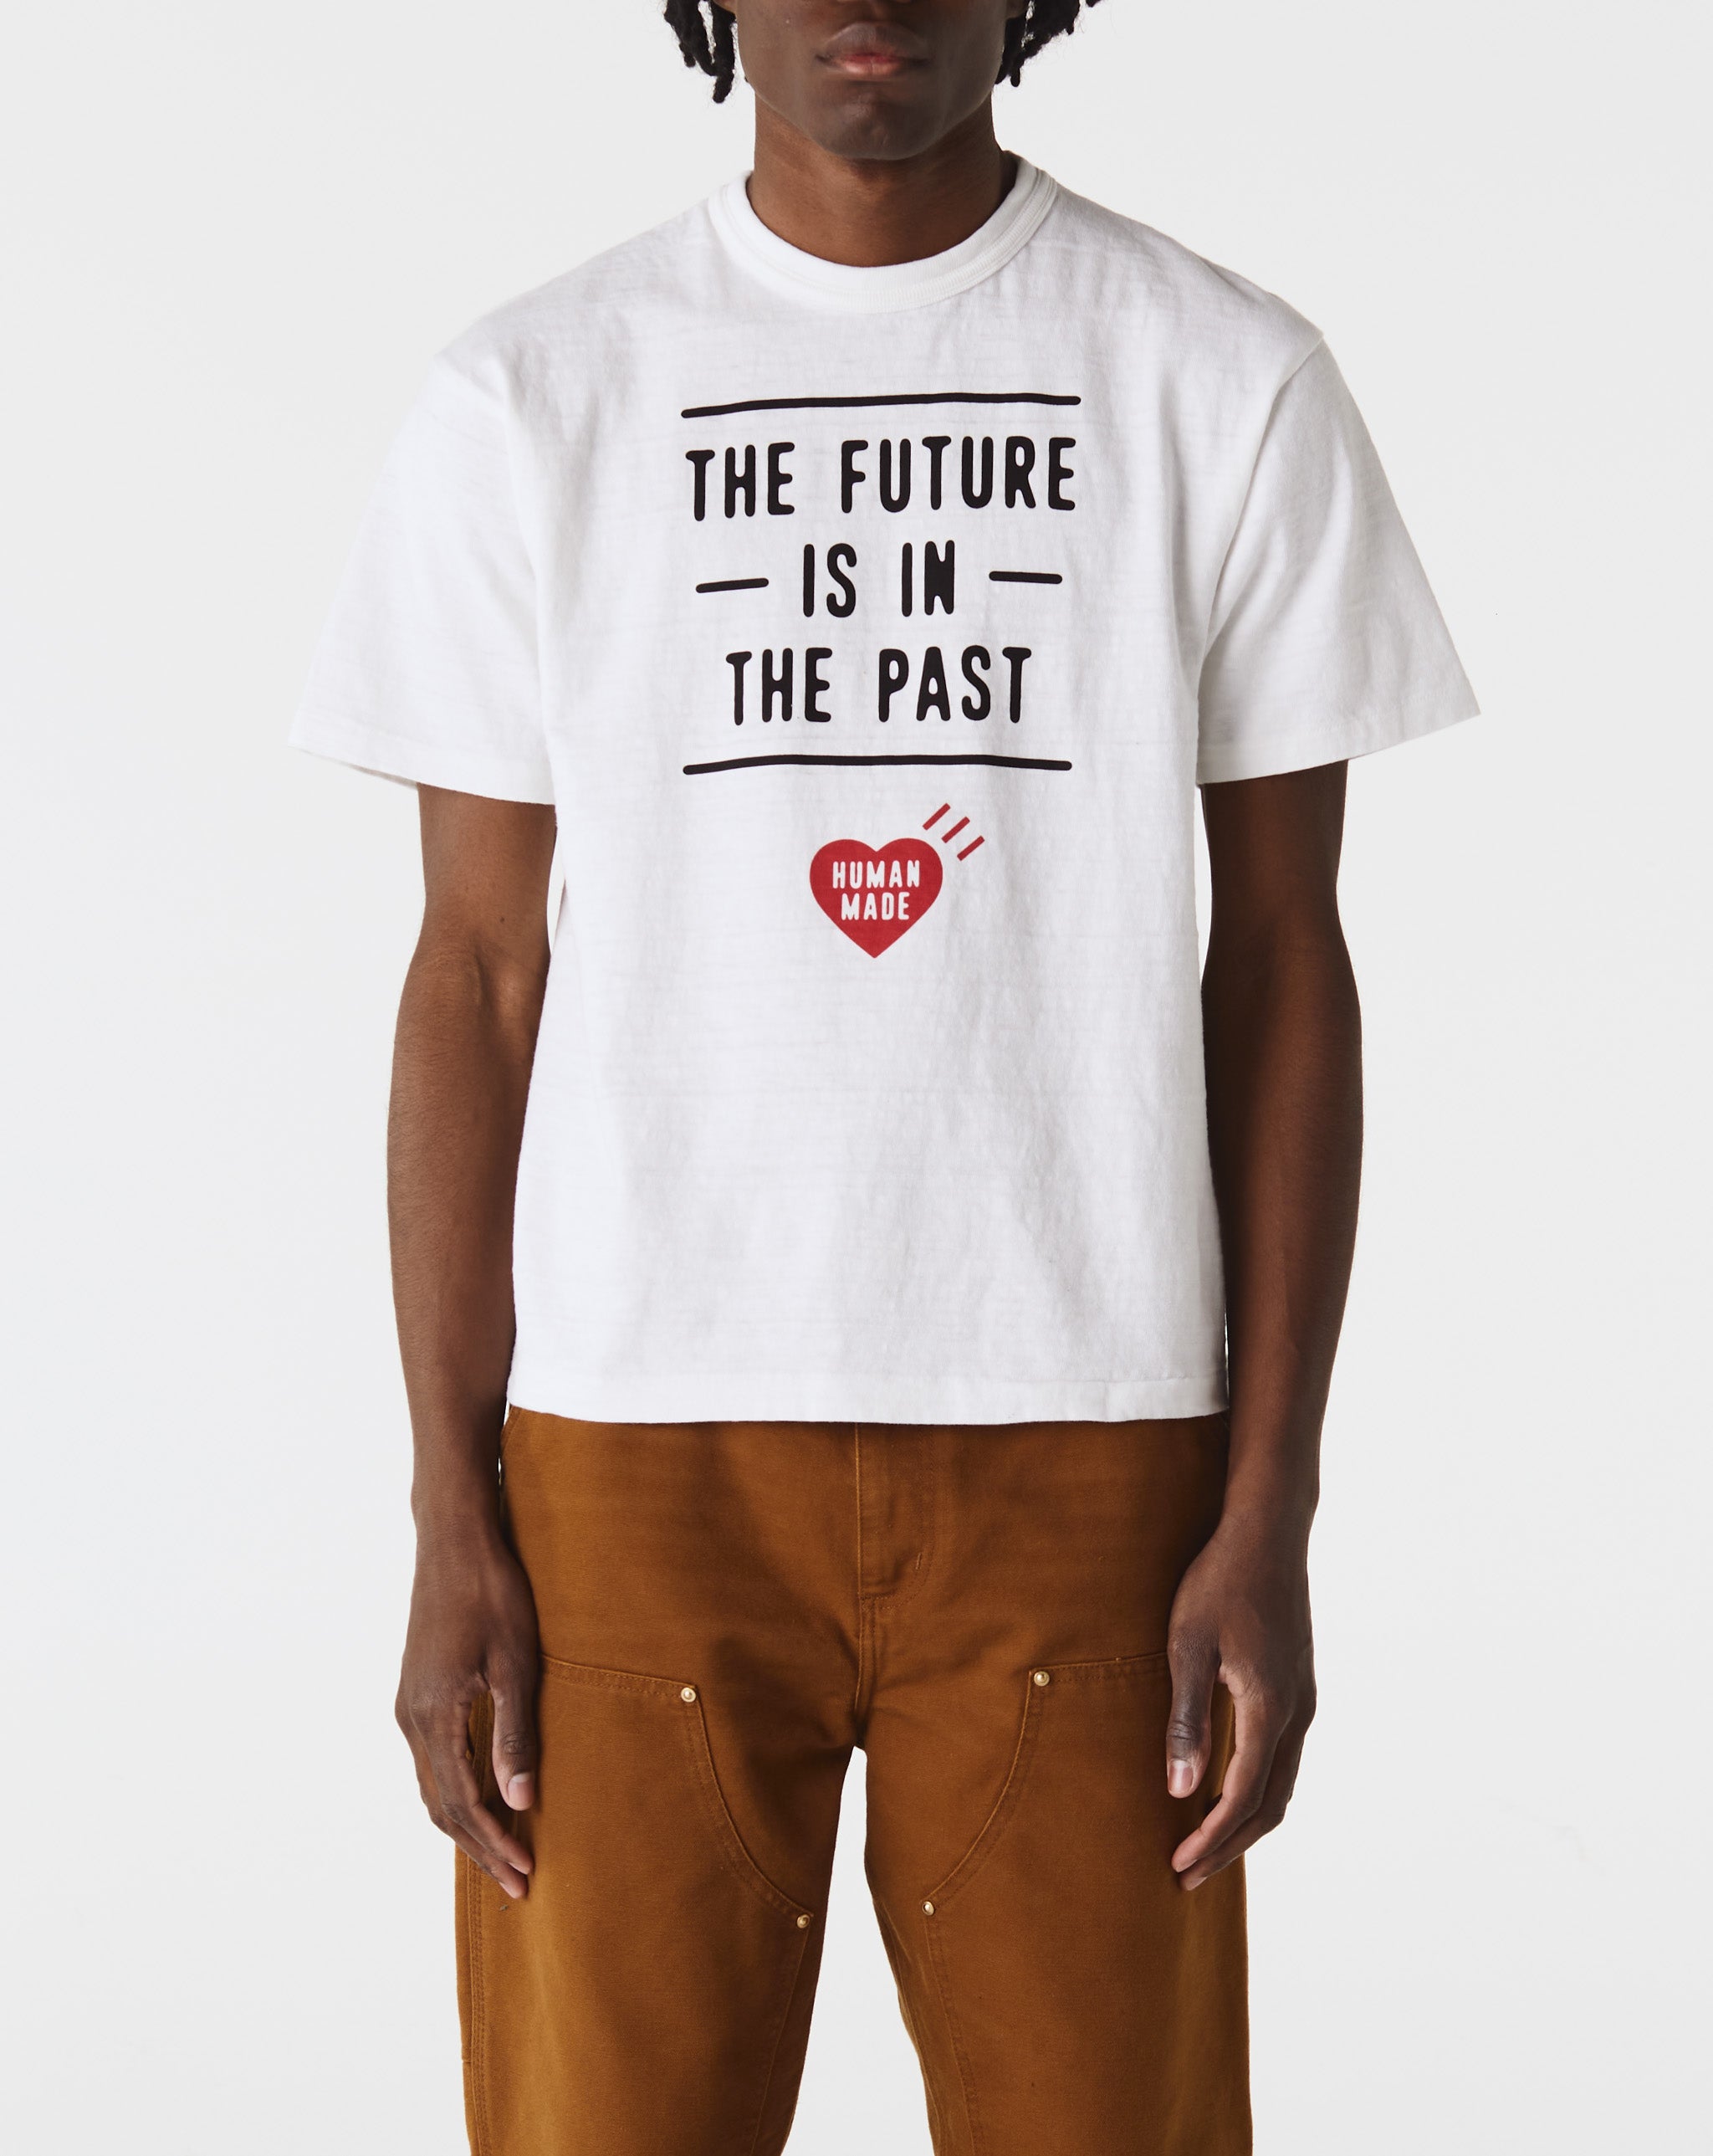 Human Made Graphic T-Shirt #03  - XHIBITION